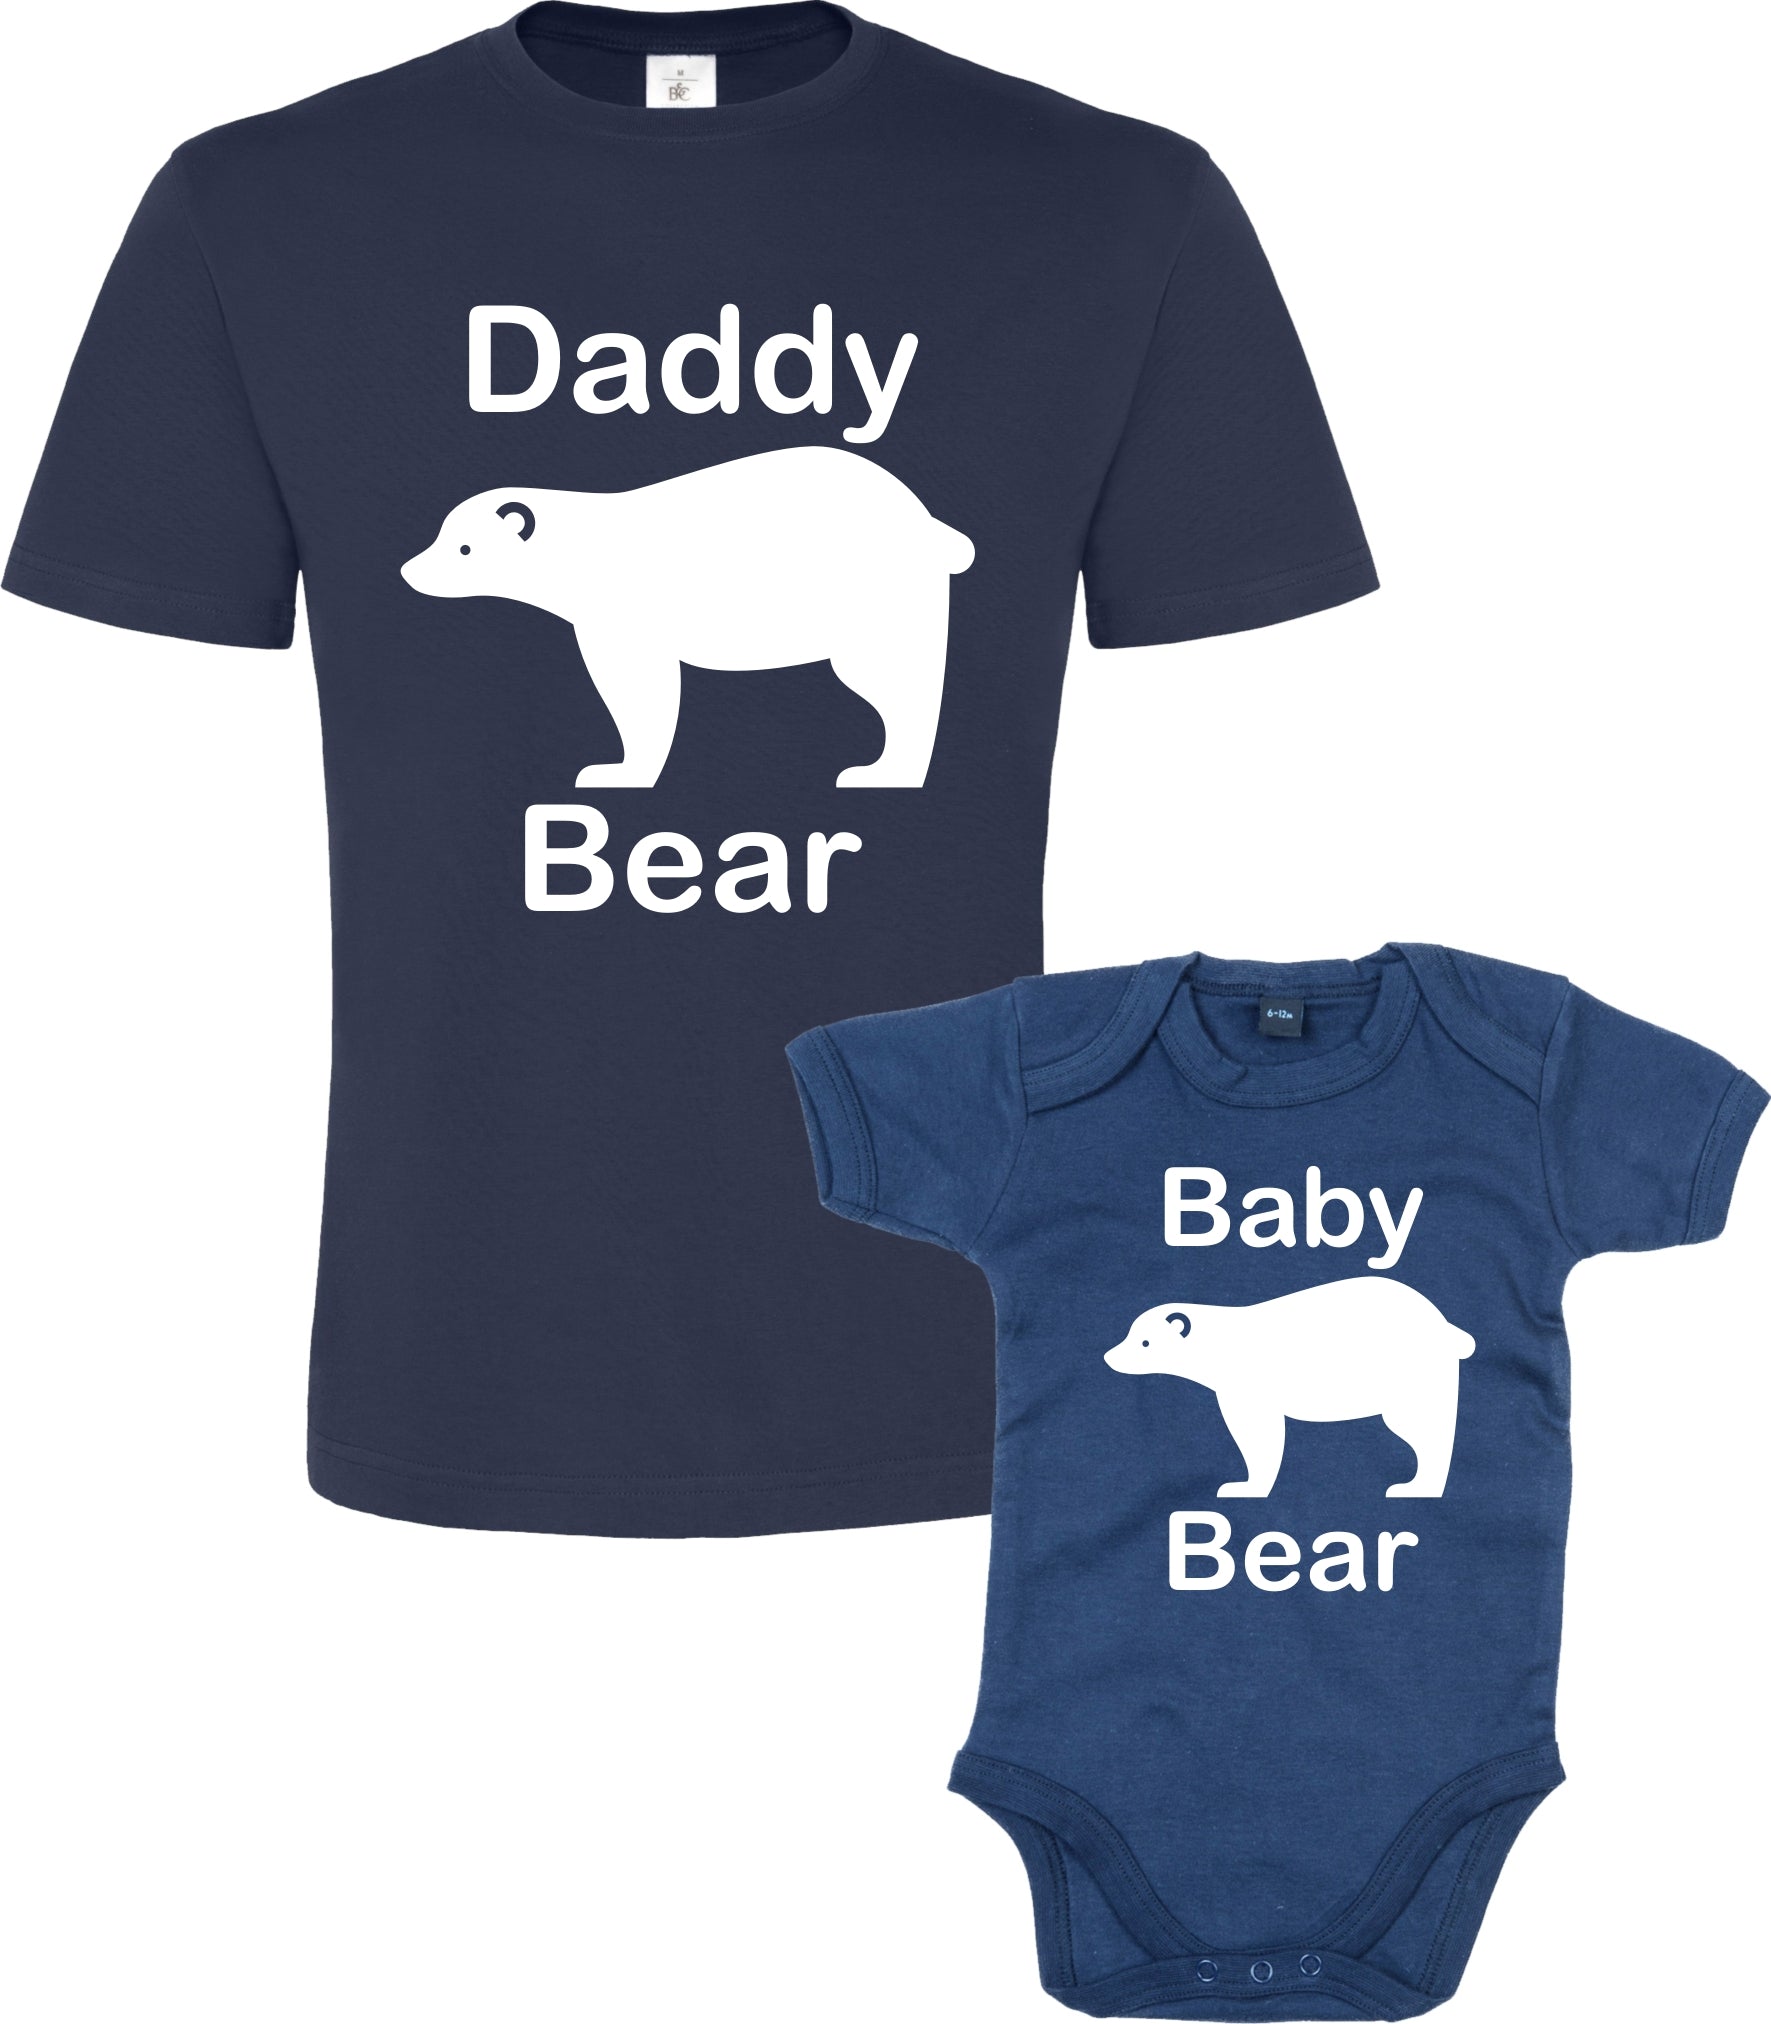 Daddy Bear and Baby Bear T-Shirt & Baby Bodysuit Set